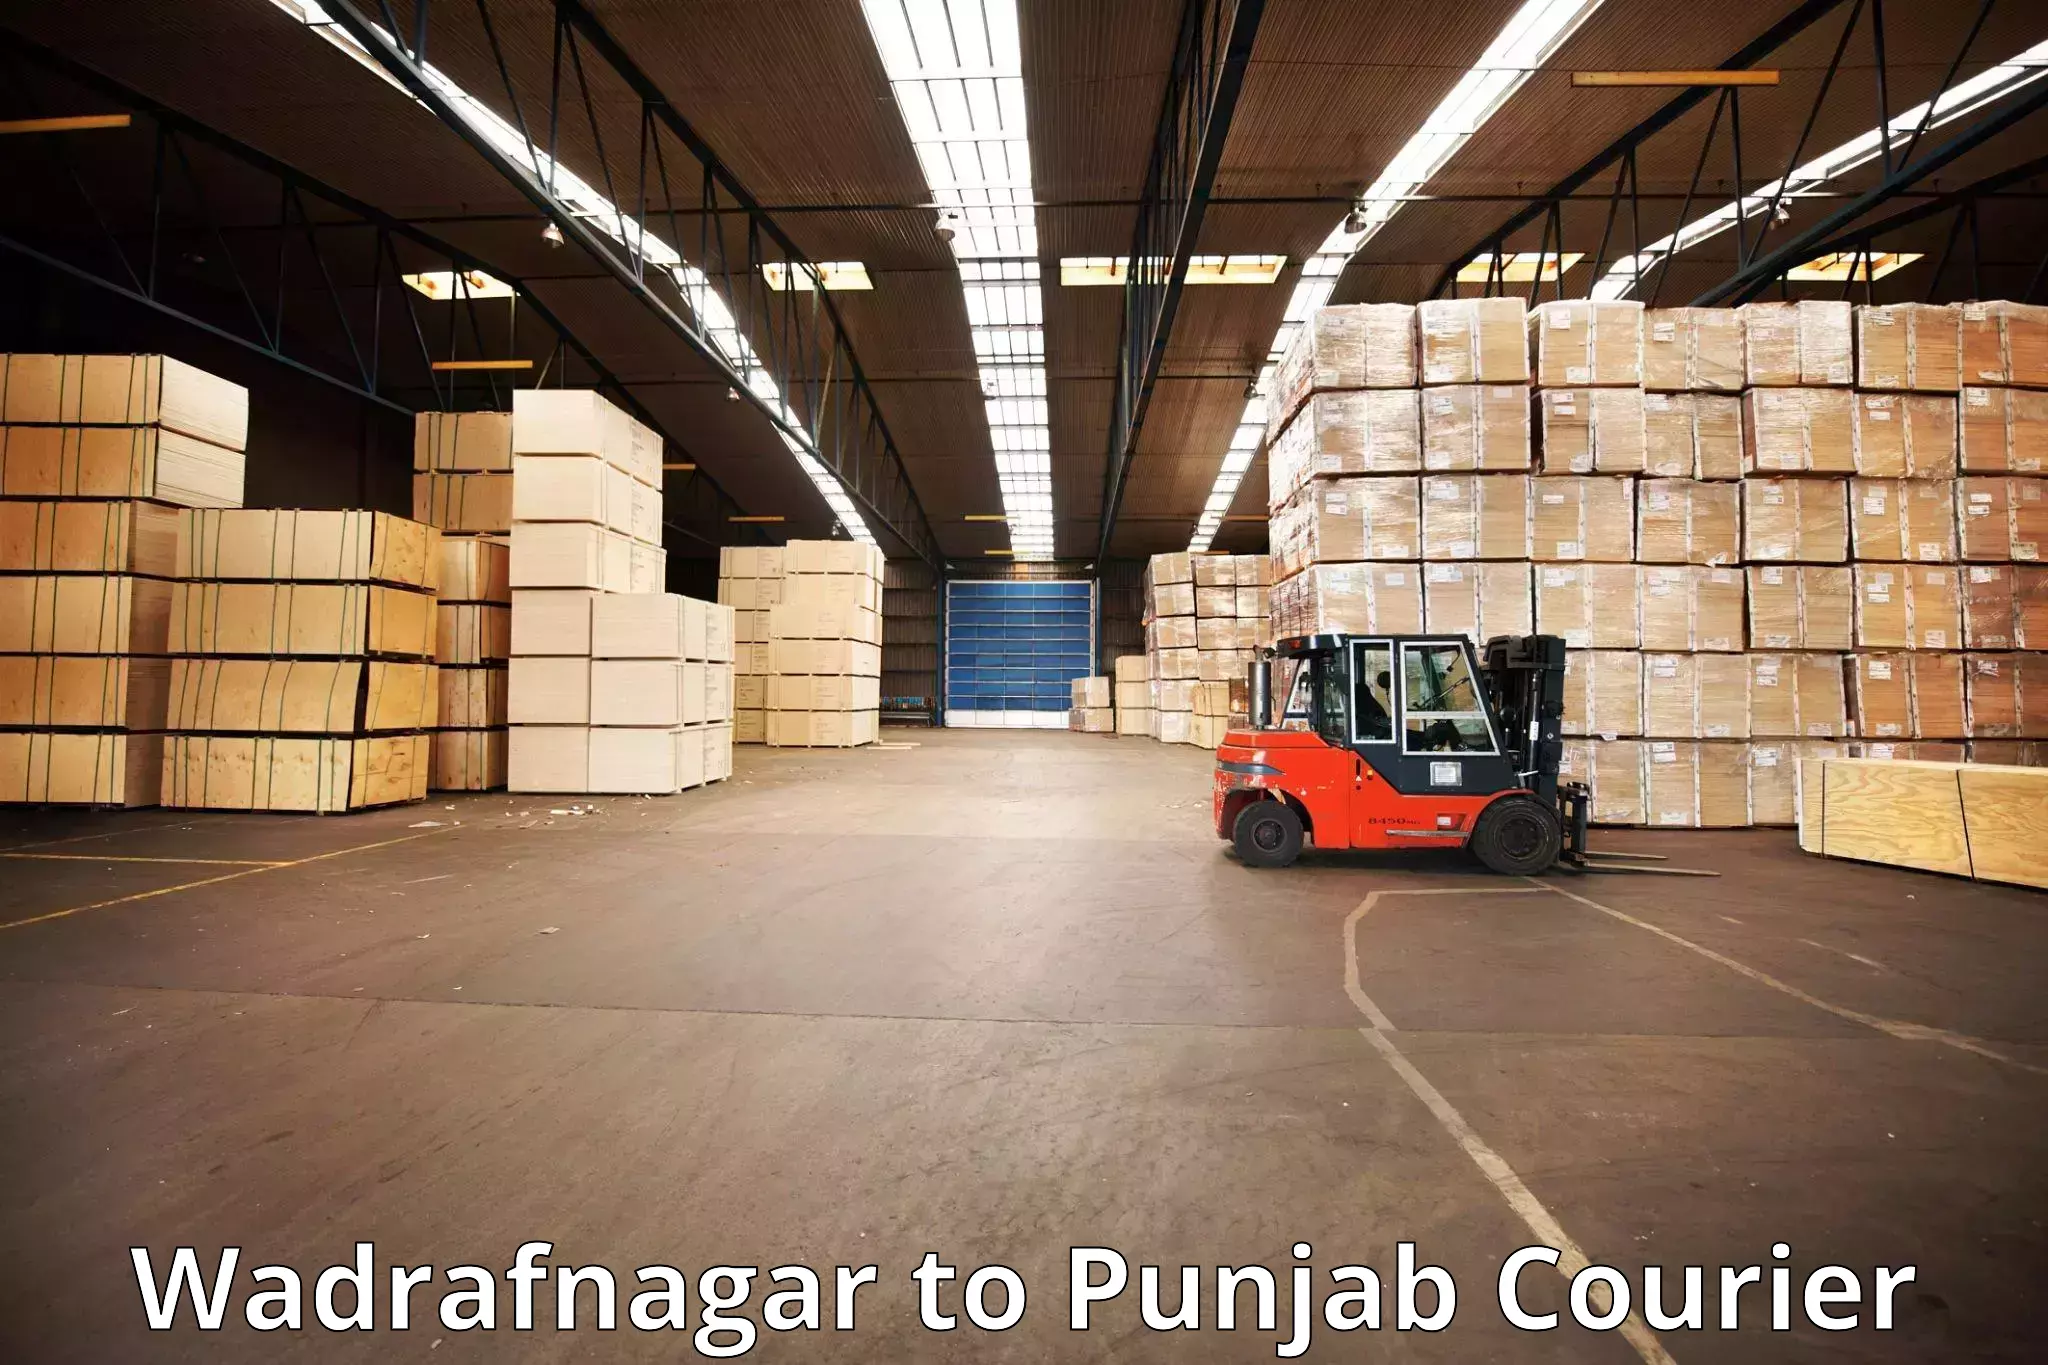 Luggage delivery network Wadrafnagar to Nawanshahr